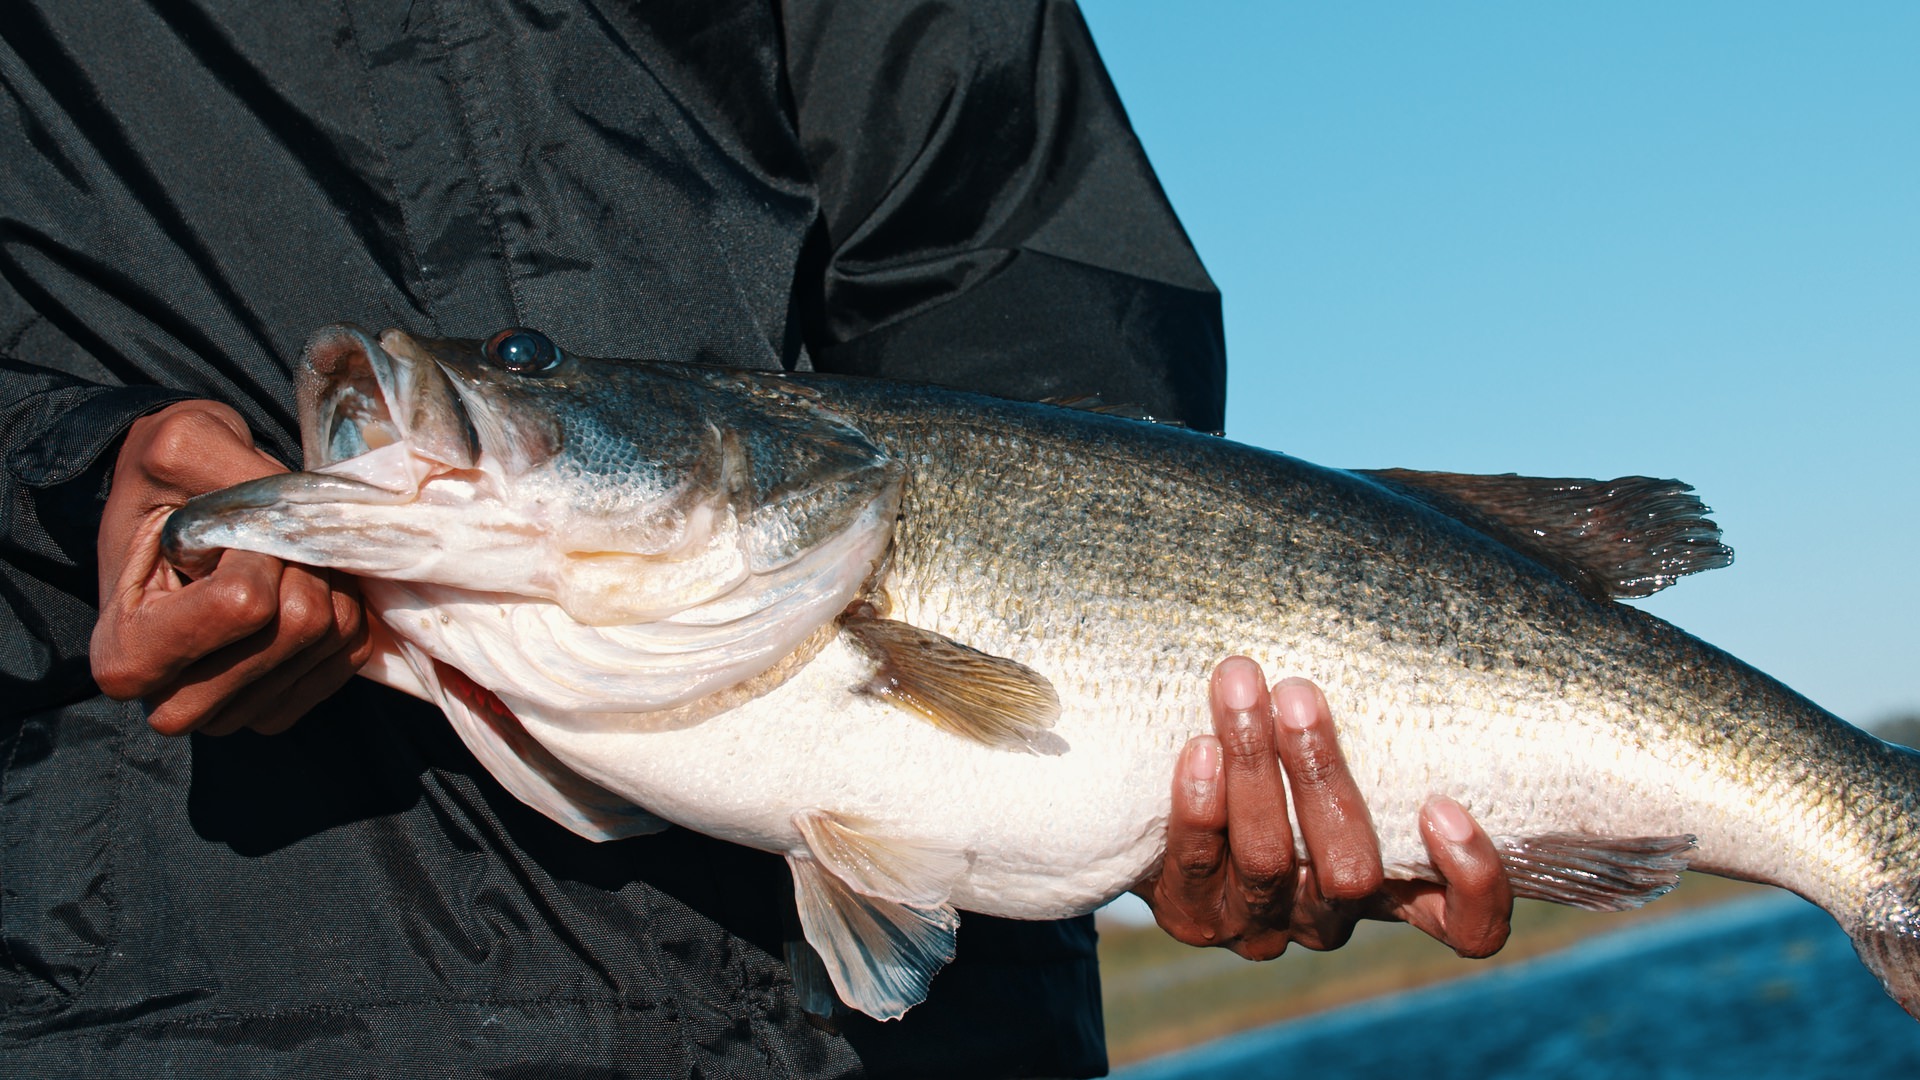 Florida bass fishing guides